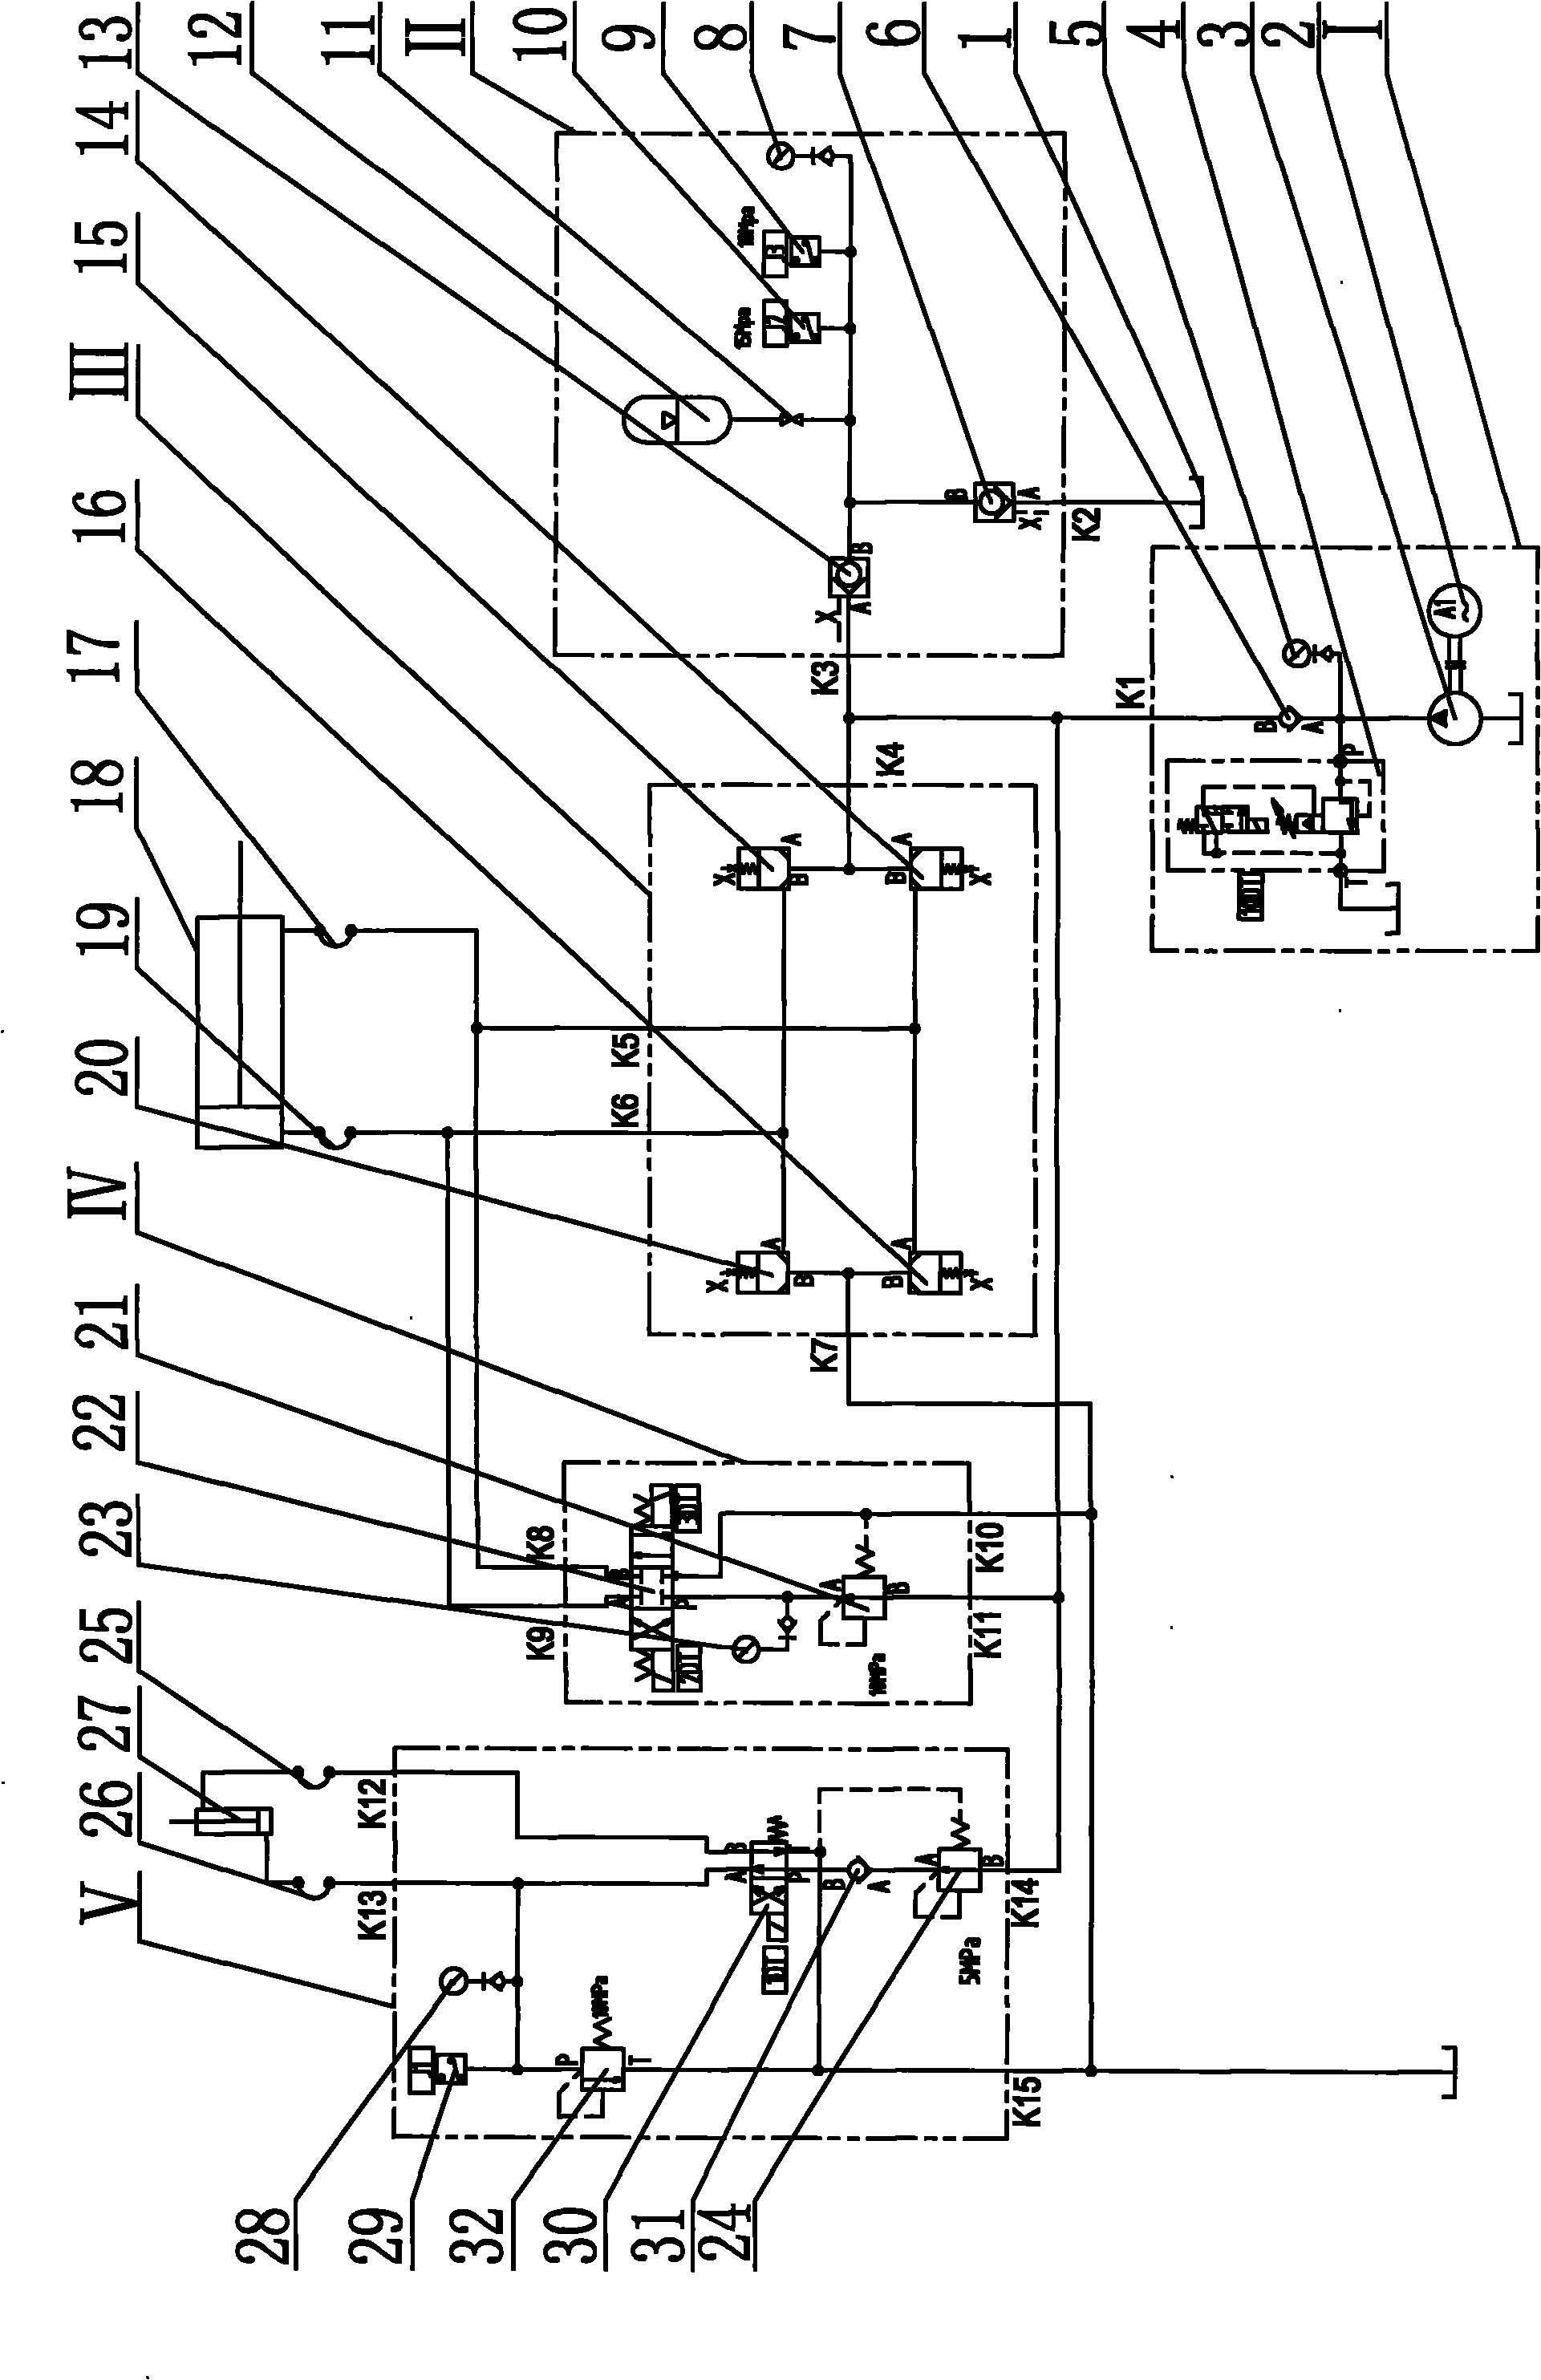 Hydraulic transmission loop of diagonal cutter shearing machine